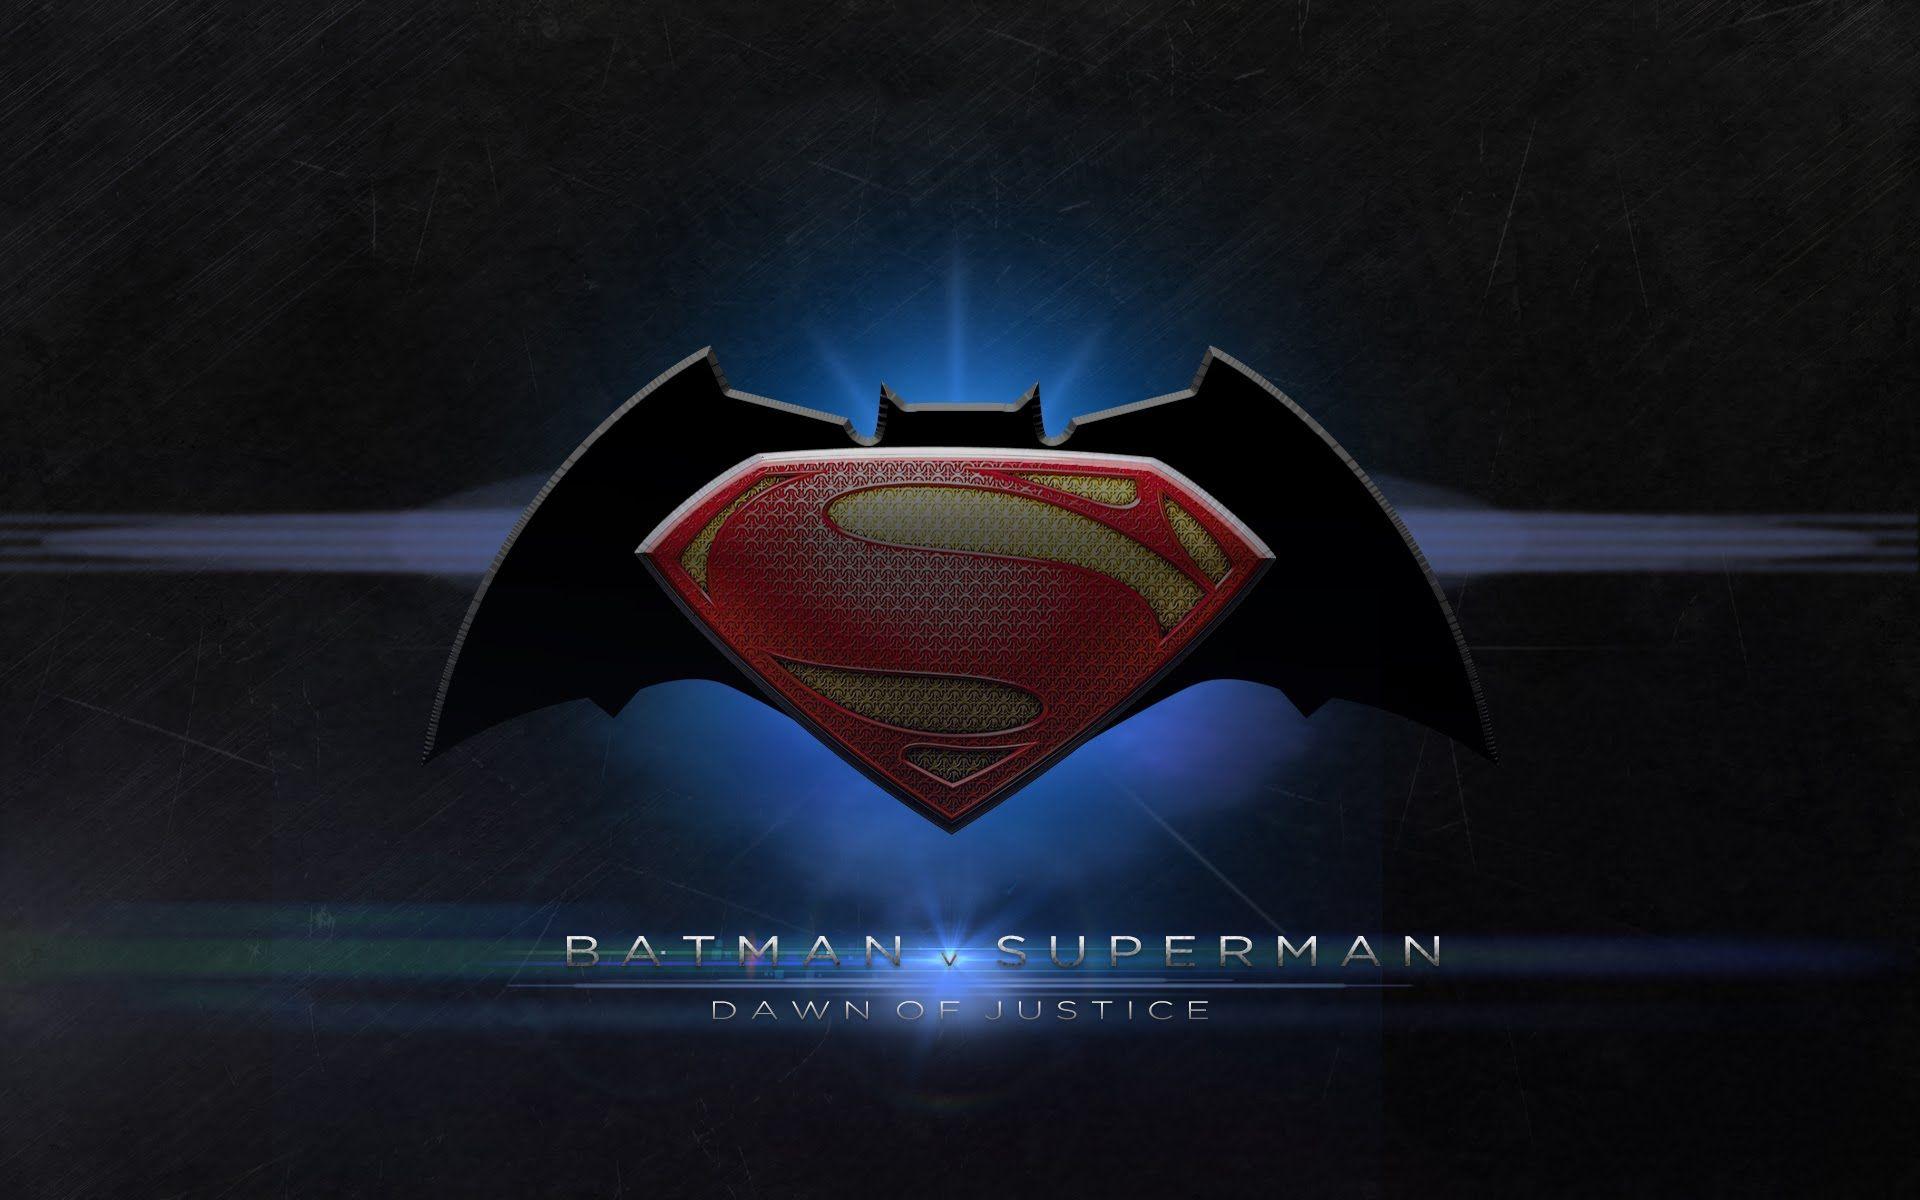 Batman v Superman logo Full HD Wallpaper and Background